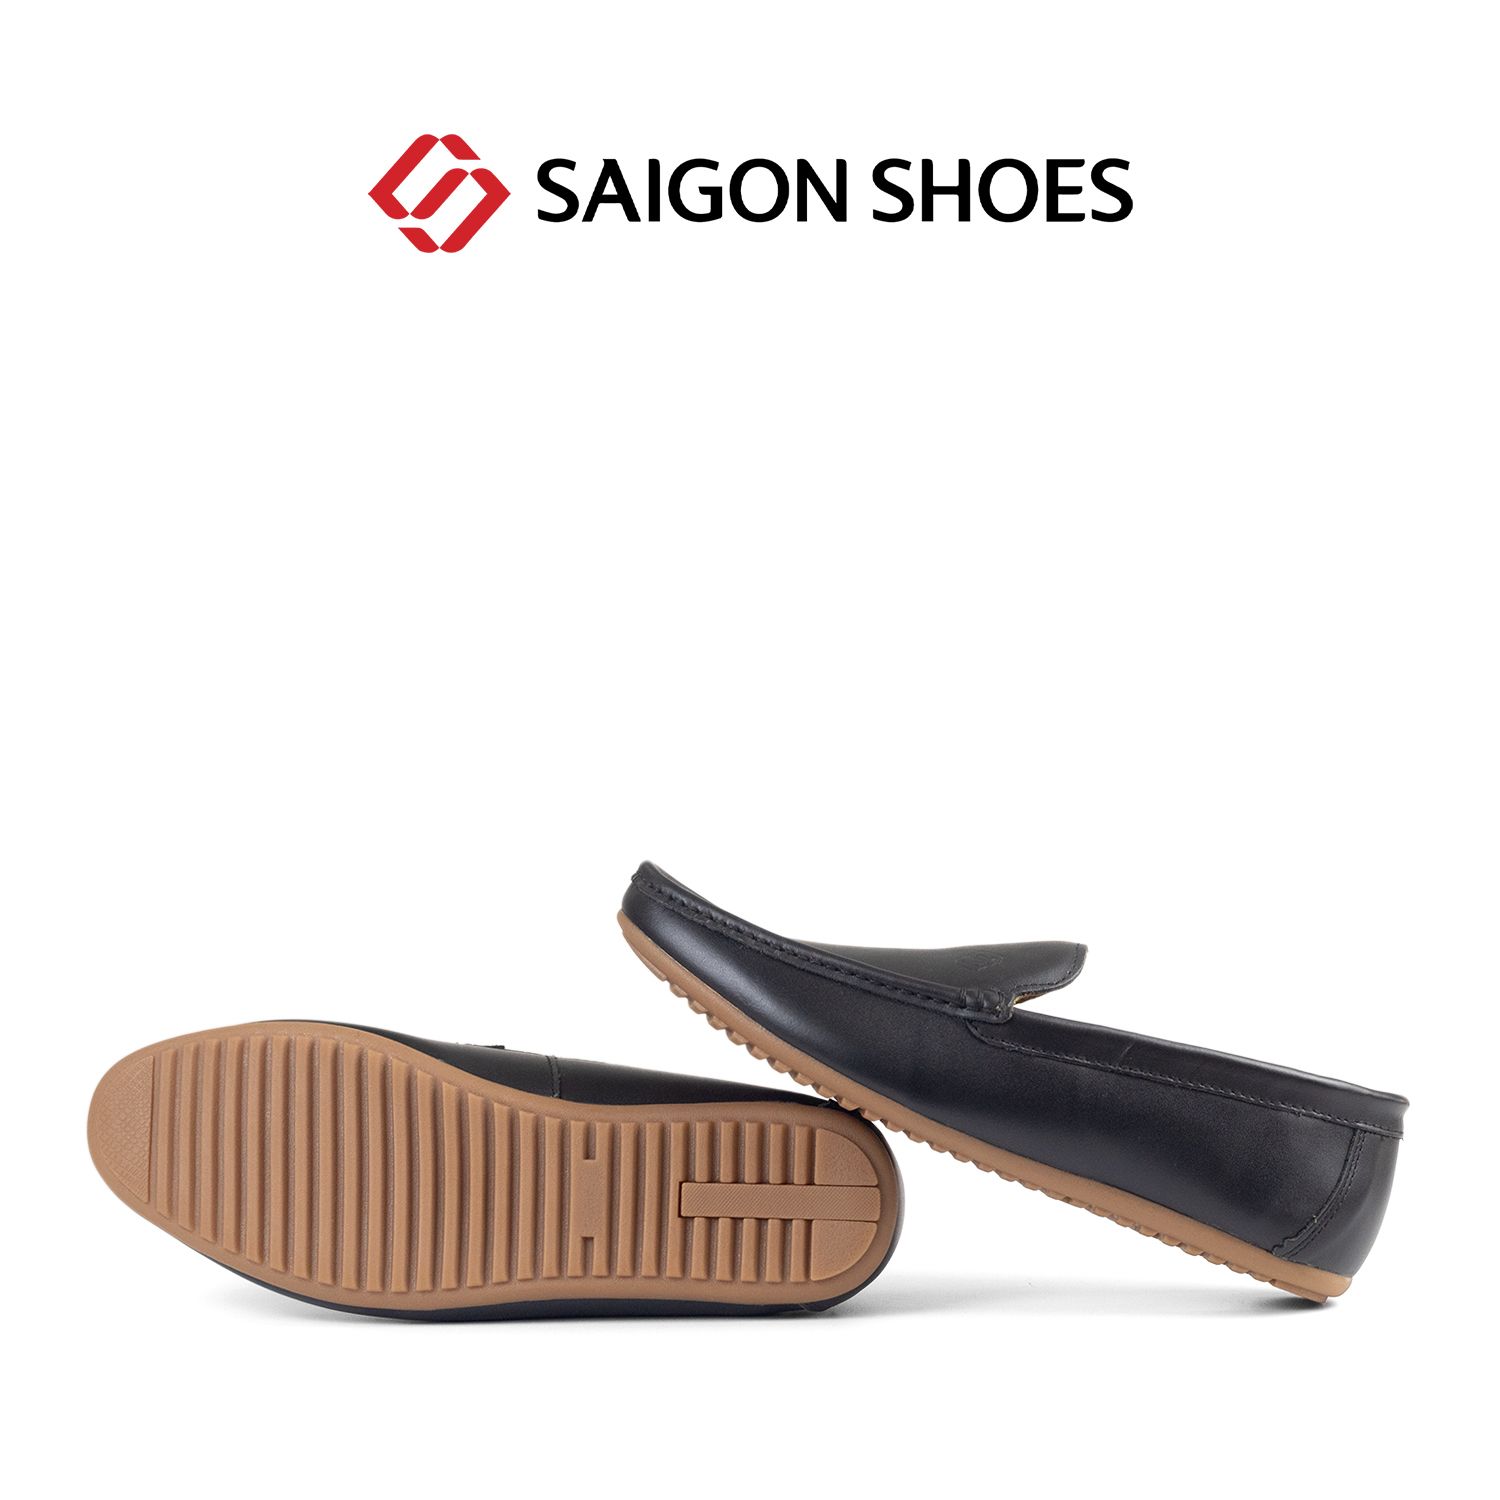 Pierre Cardin Paris Vietnam: Giày Mọi Saigon Shoes -  SGMFWLH 005 (BLACK)